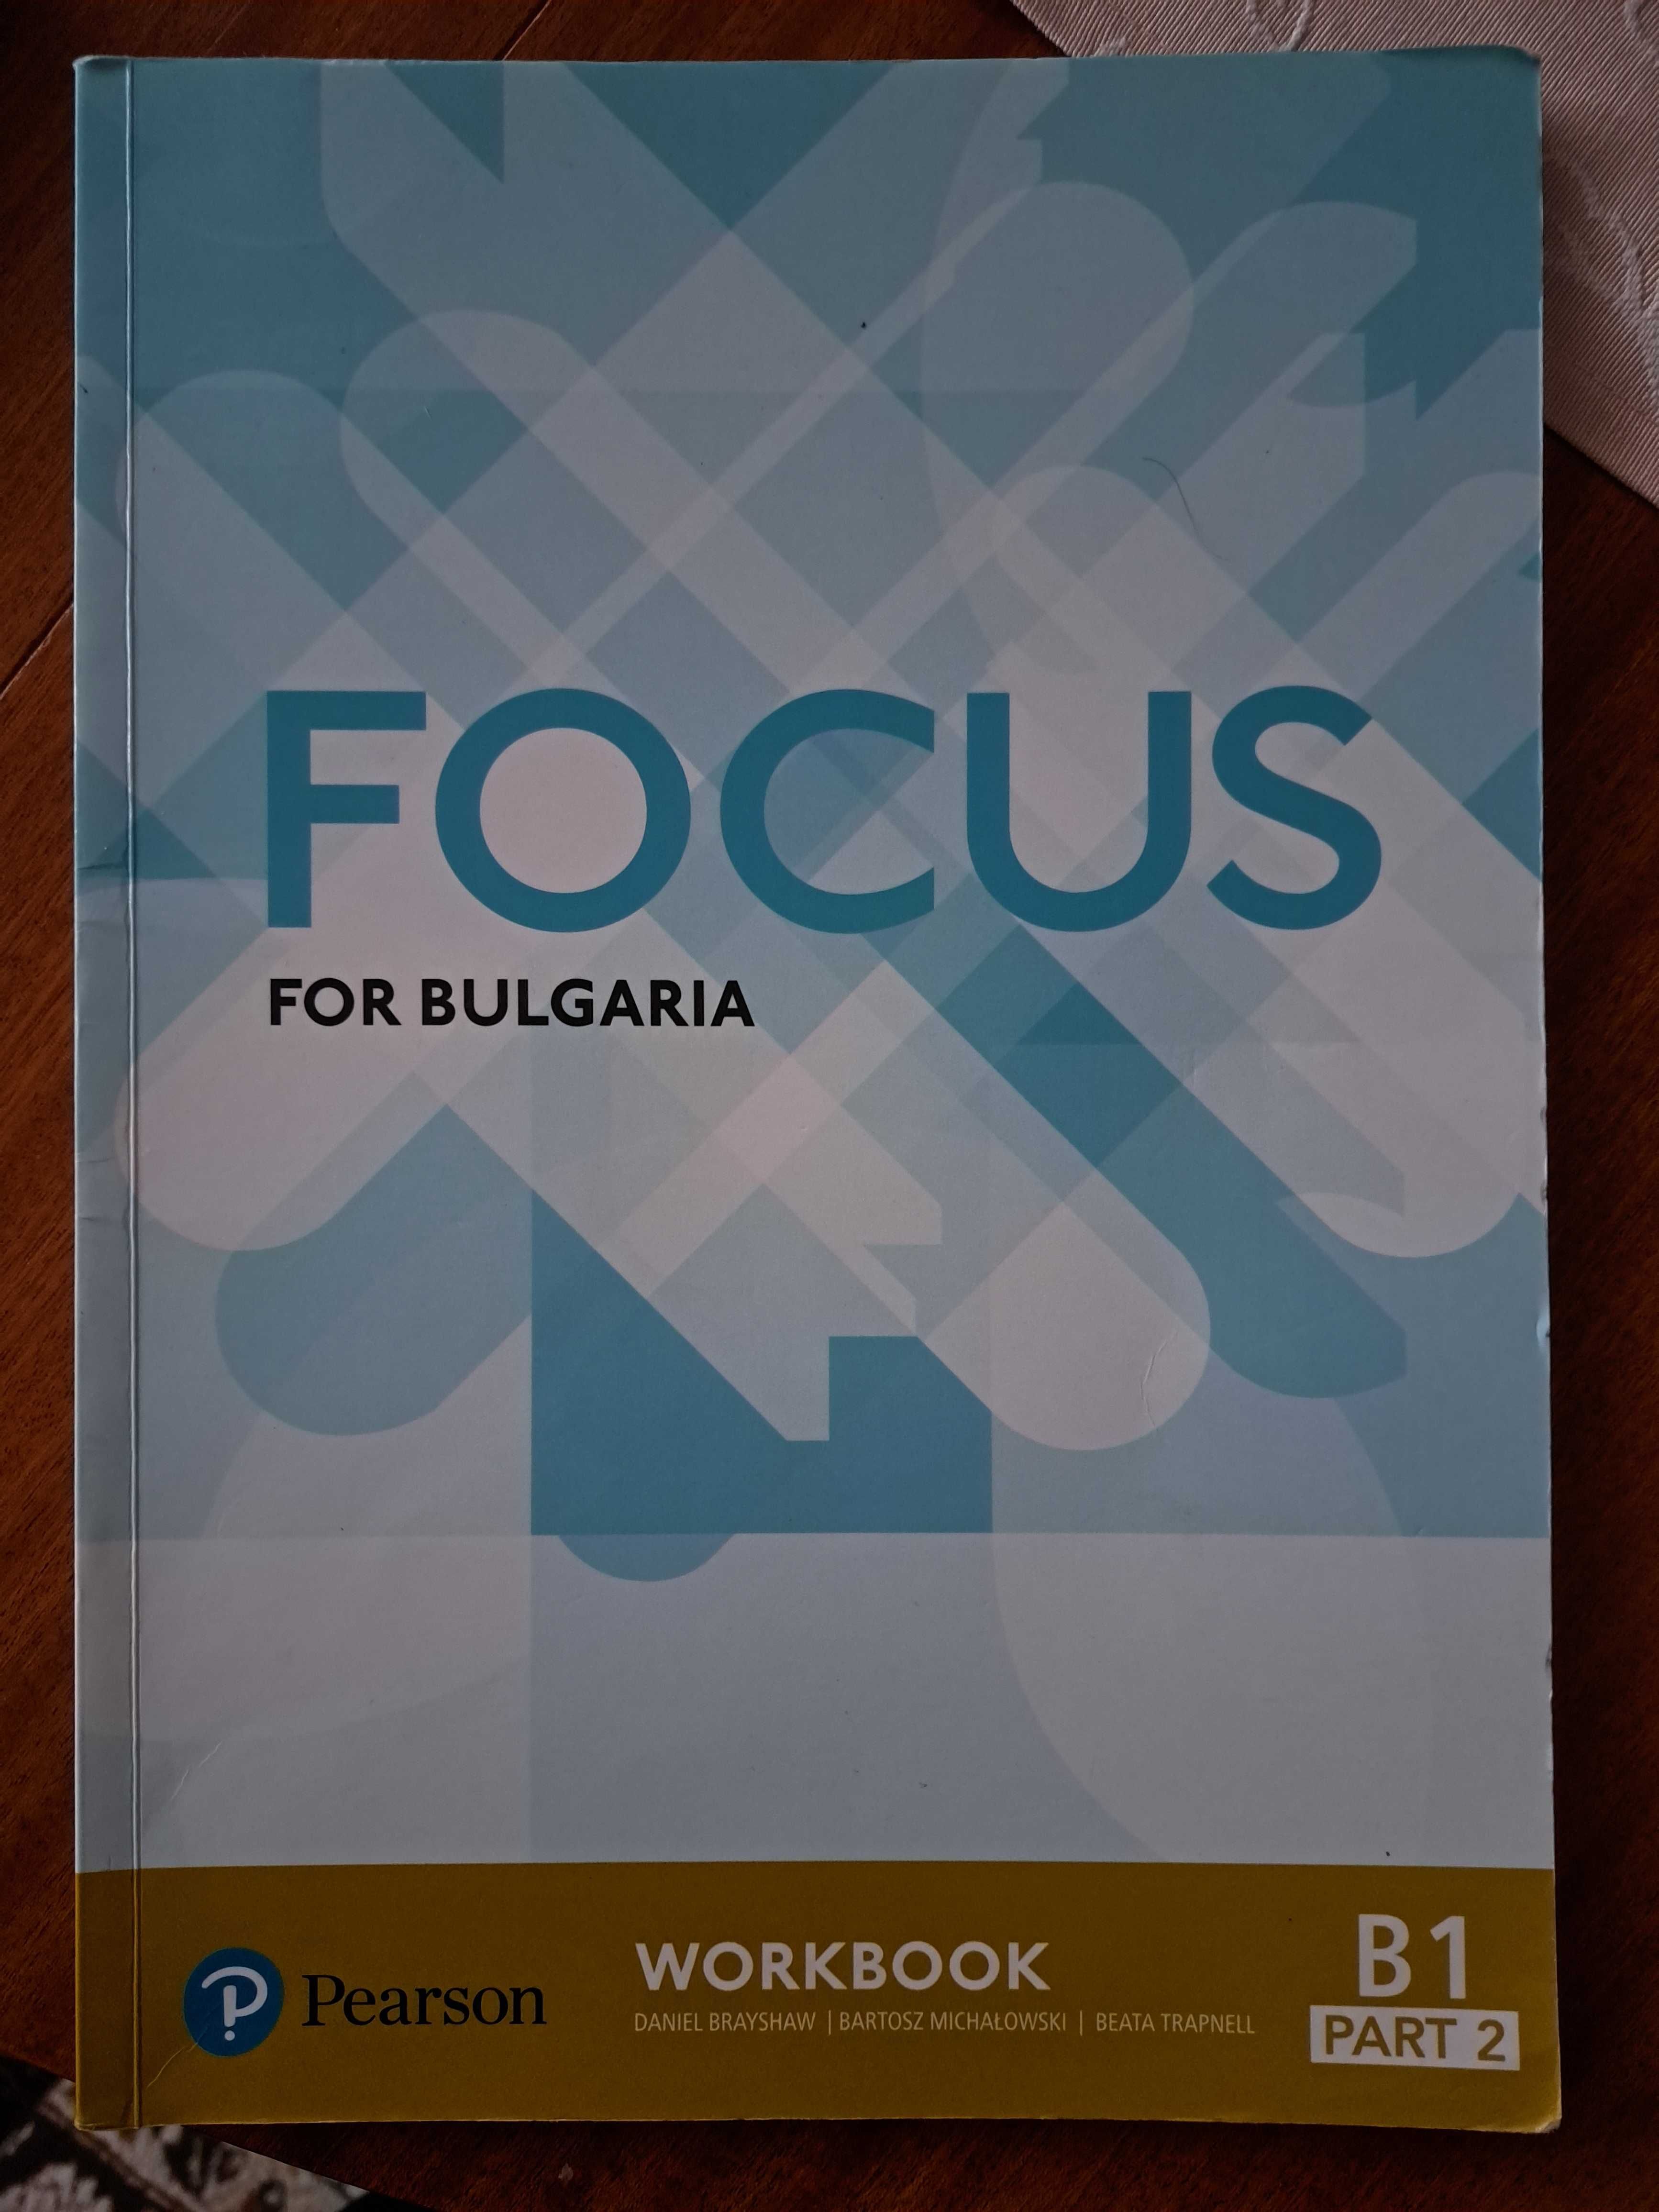 FOCUS for Bulgaria Workbook B1 Part2